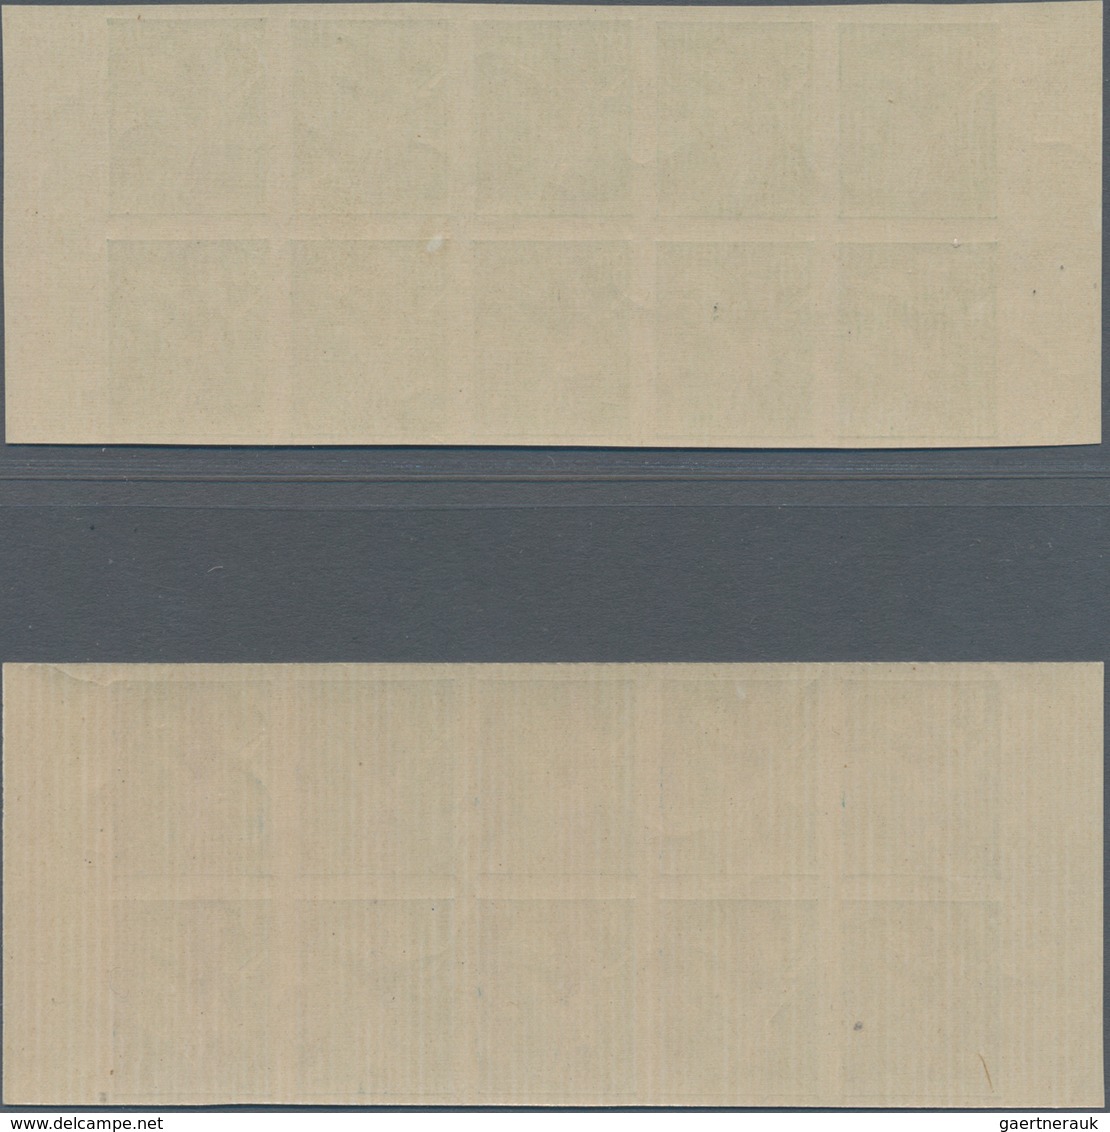 Frankreich: 1944, Definitives "Iris", 80c.-4fr., complete set of ten values in imperforate marginal